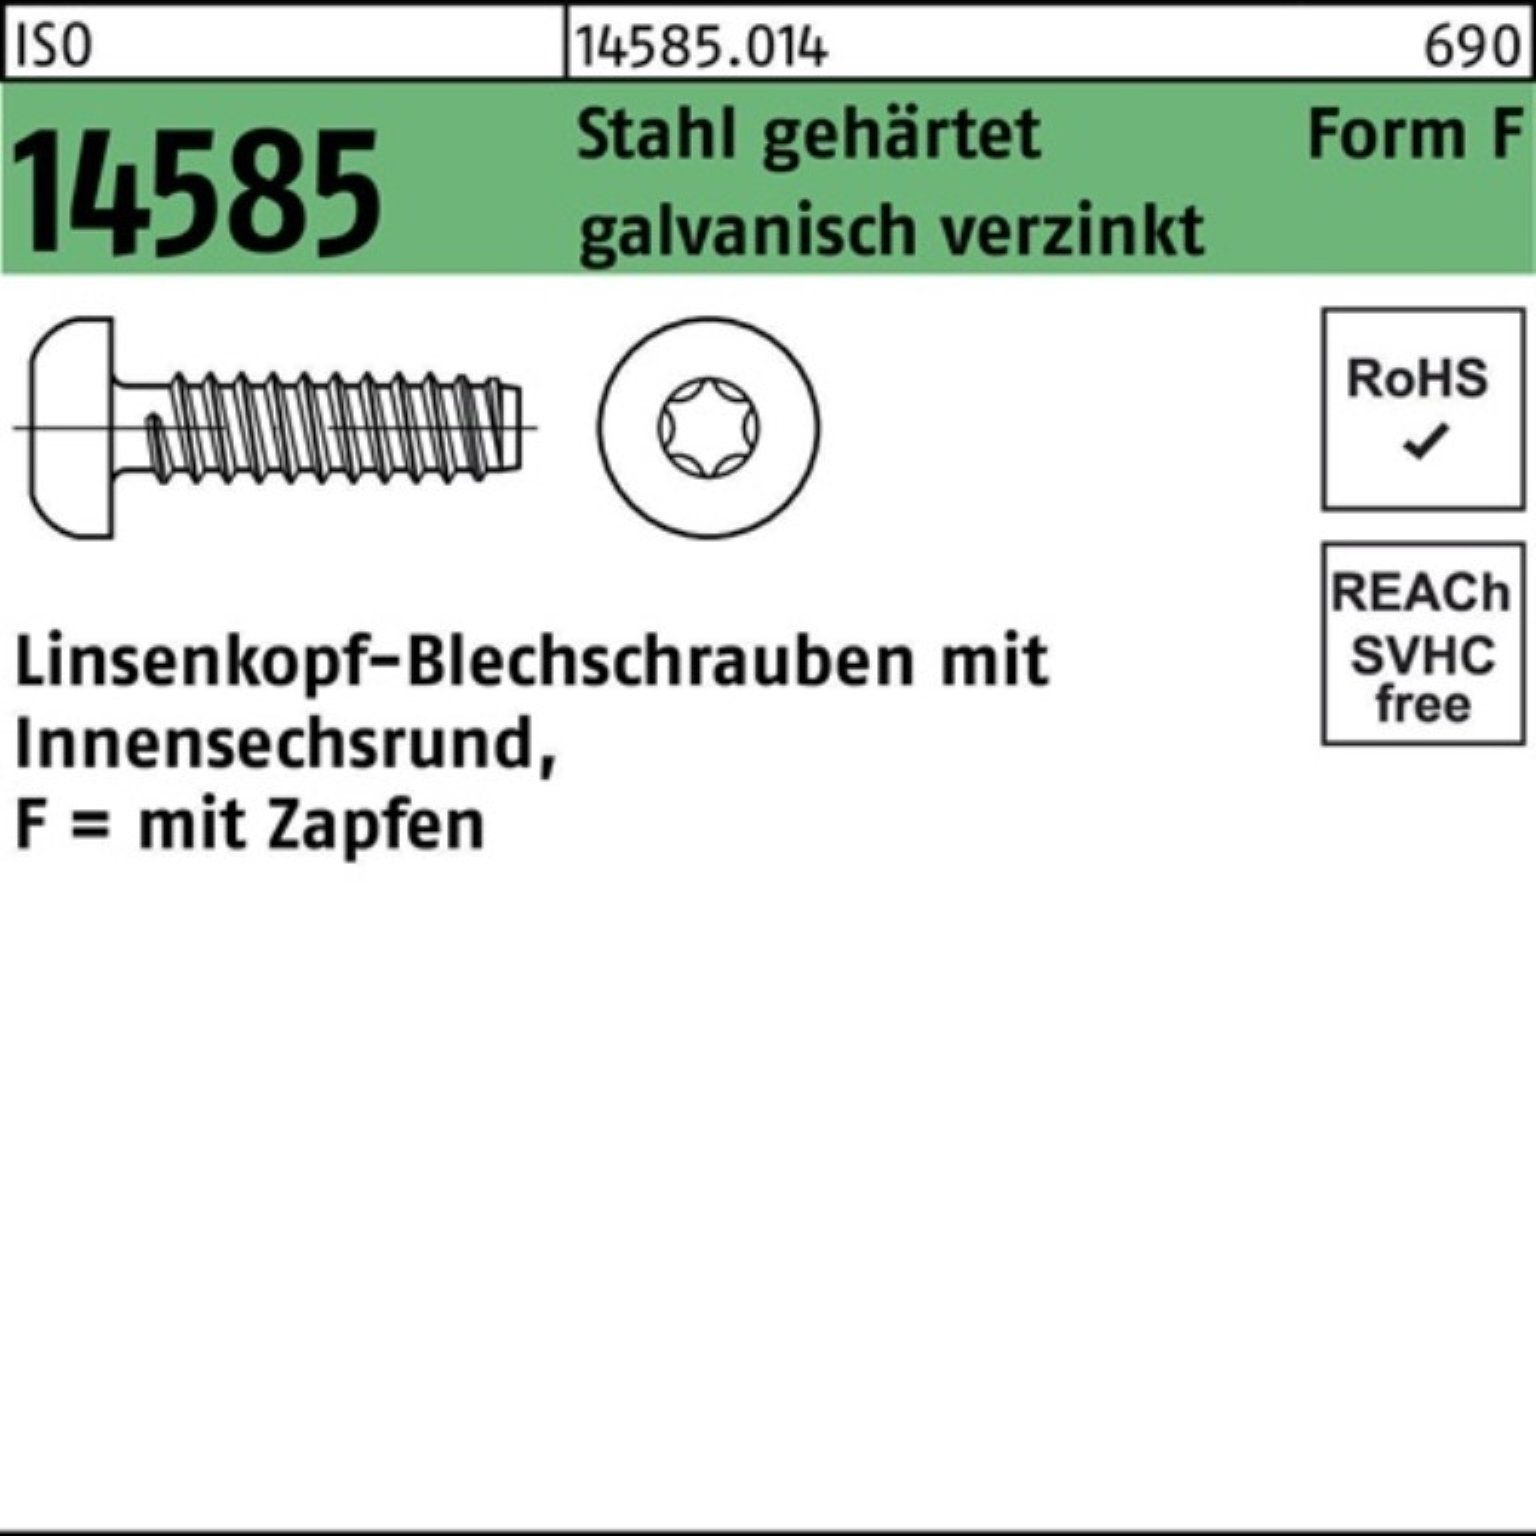 Reyher Blechschraube 1000er Pack Linsenblechschraube Stahl 3,9x9,5 14585 ISO -F ISR/Spitze